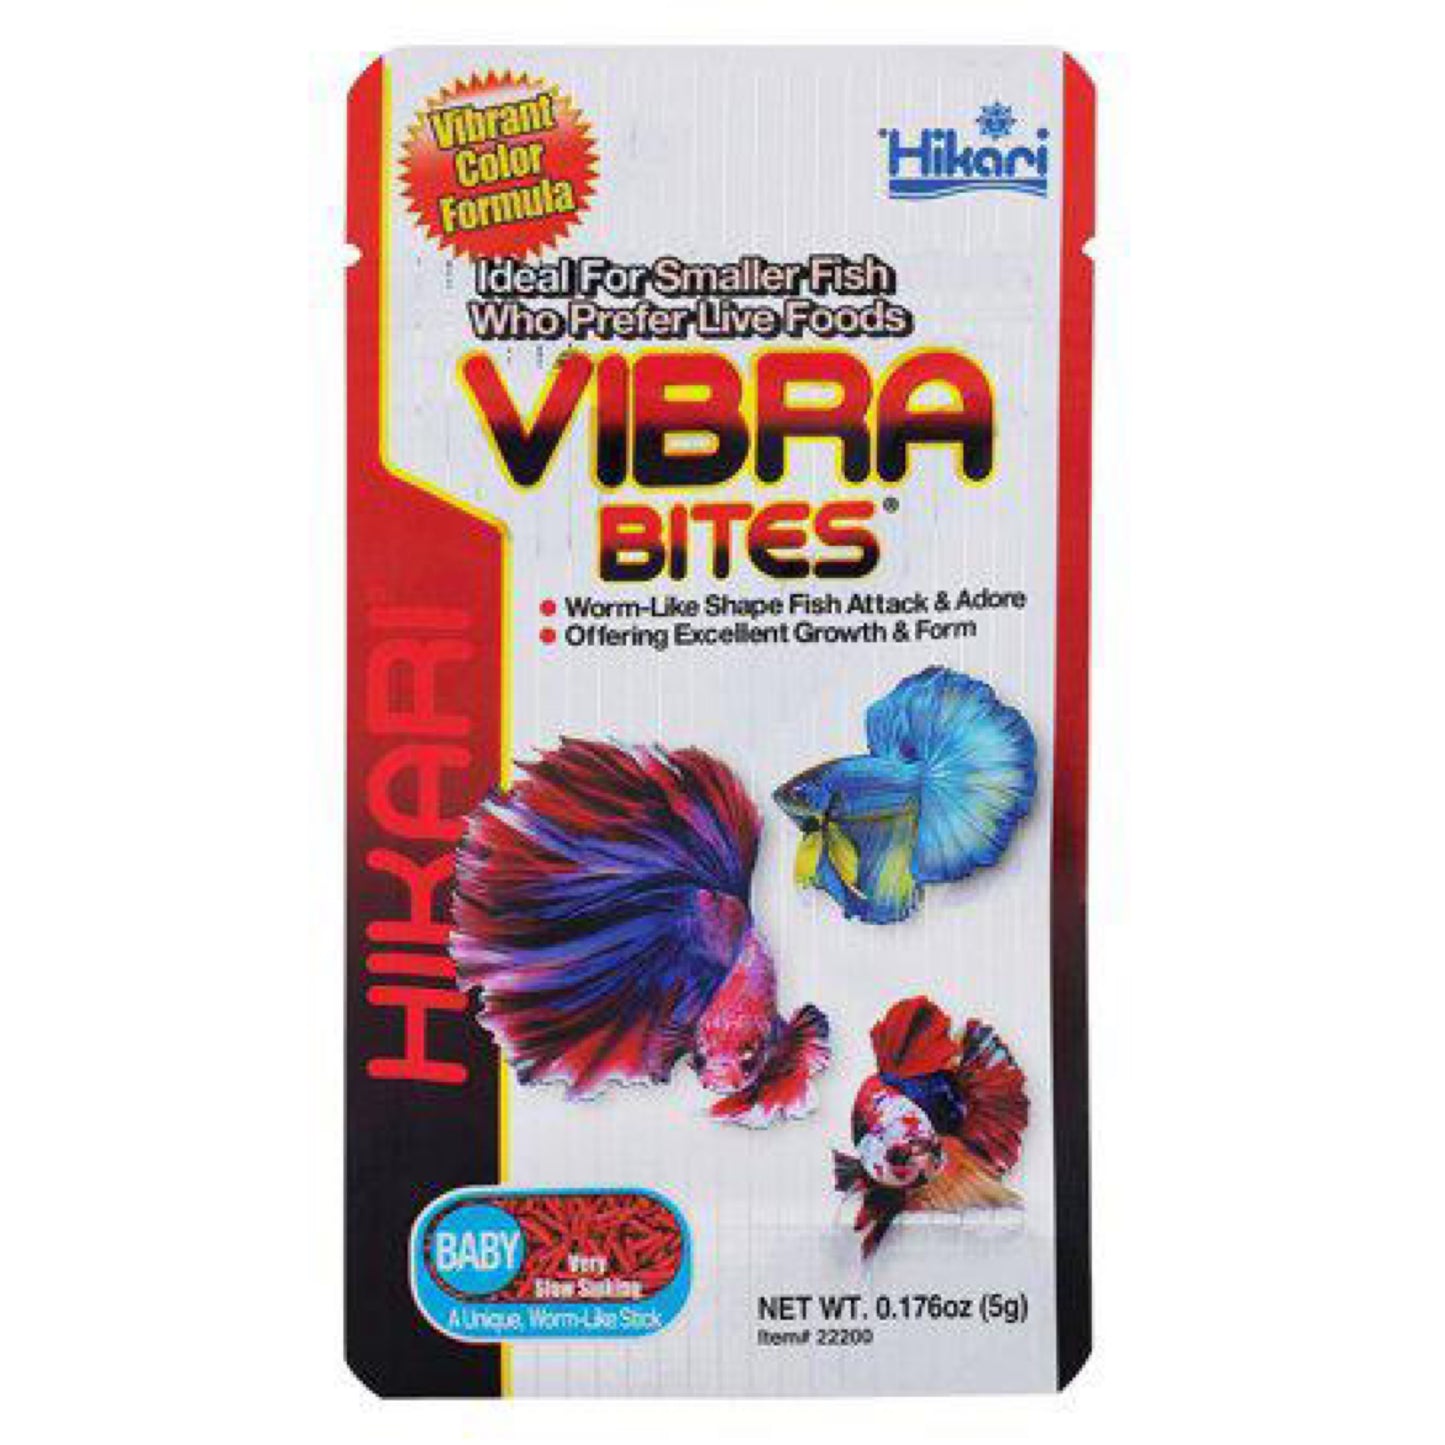 Hikari Vibra Bites Tropical Fish Food for Small Fish